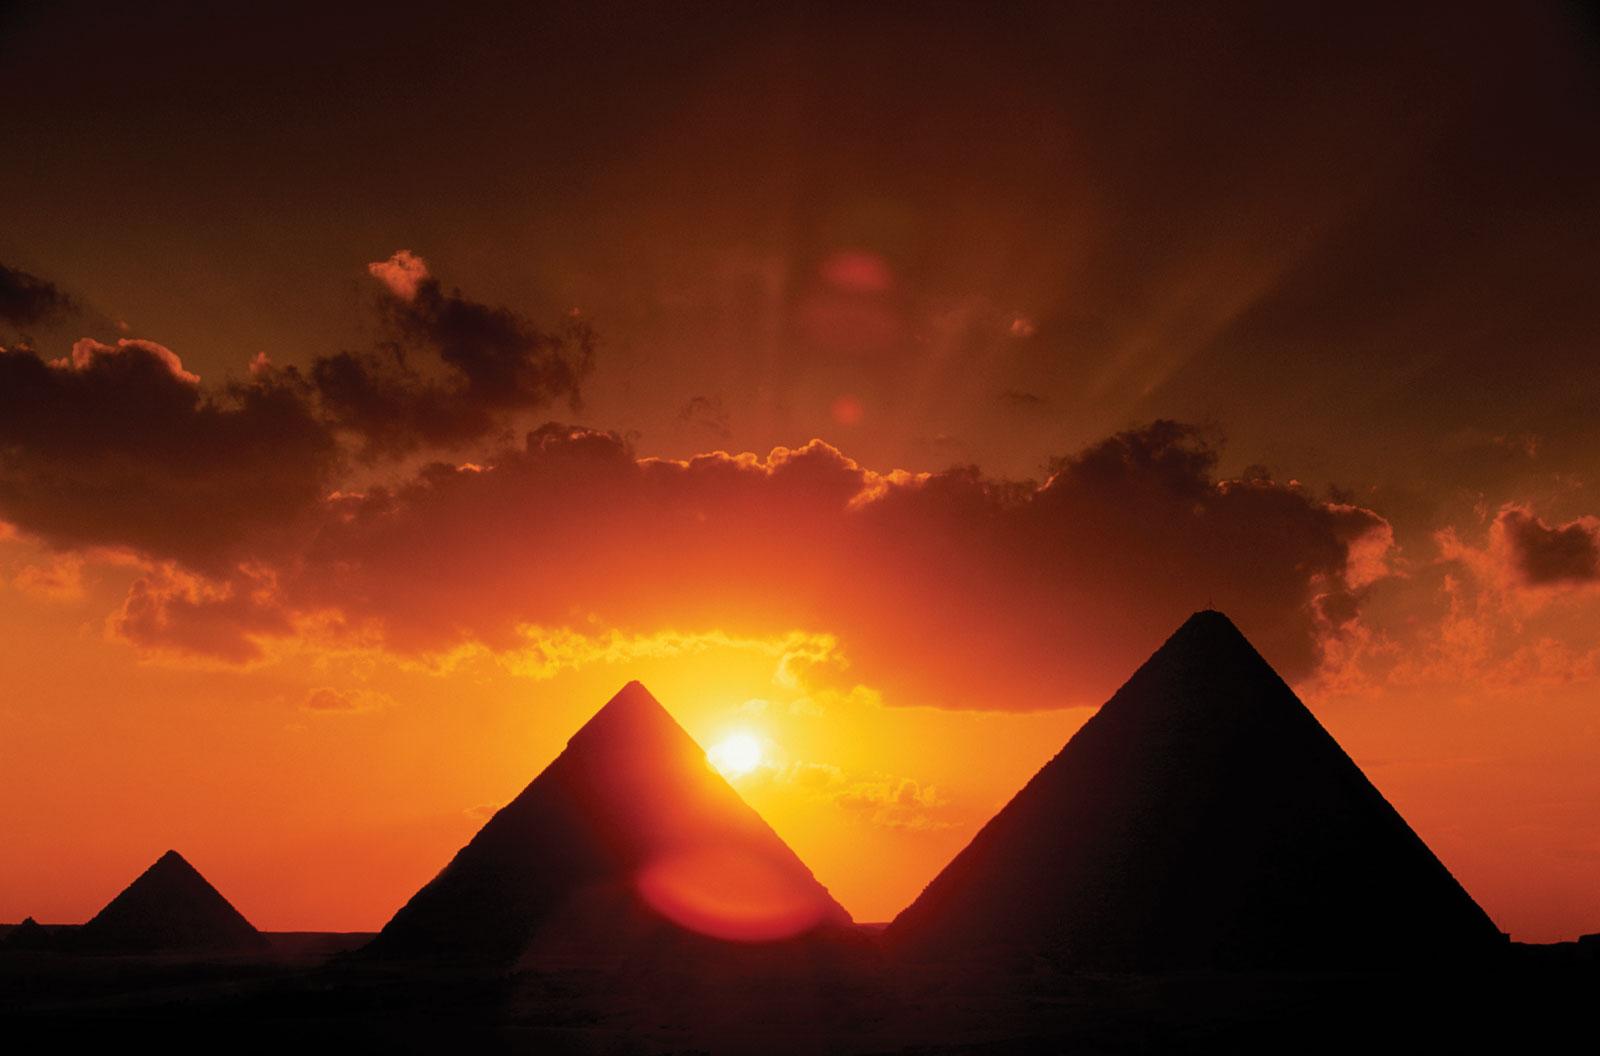 Pyramids of Giza. History & Facts